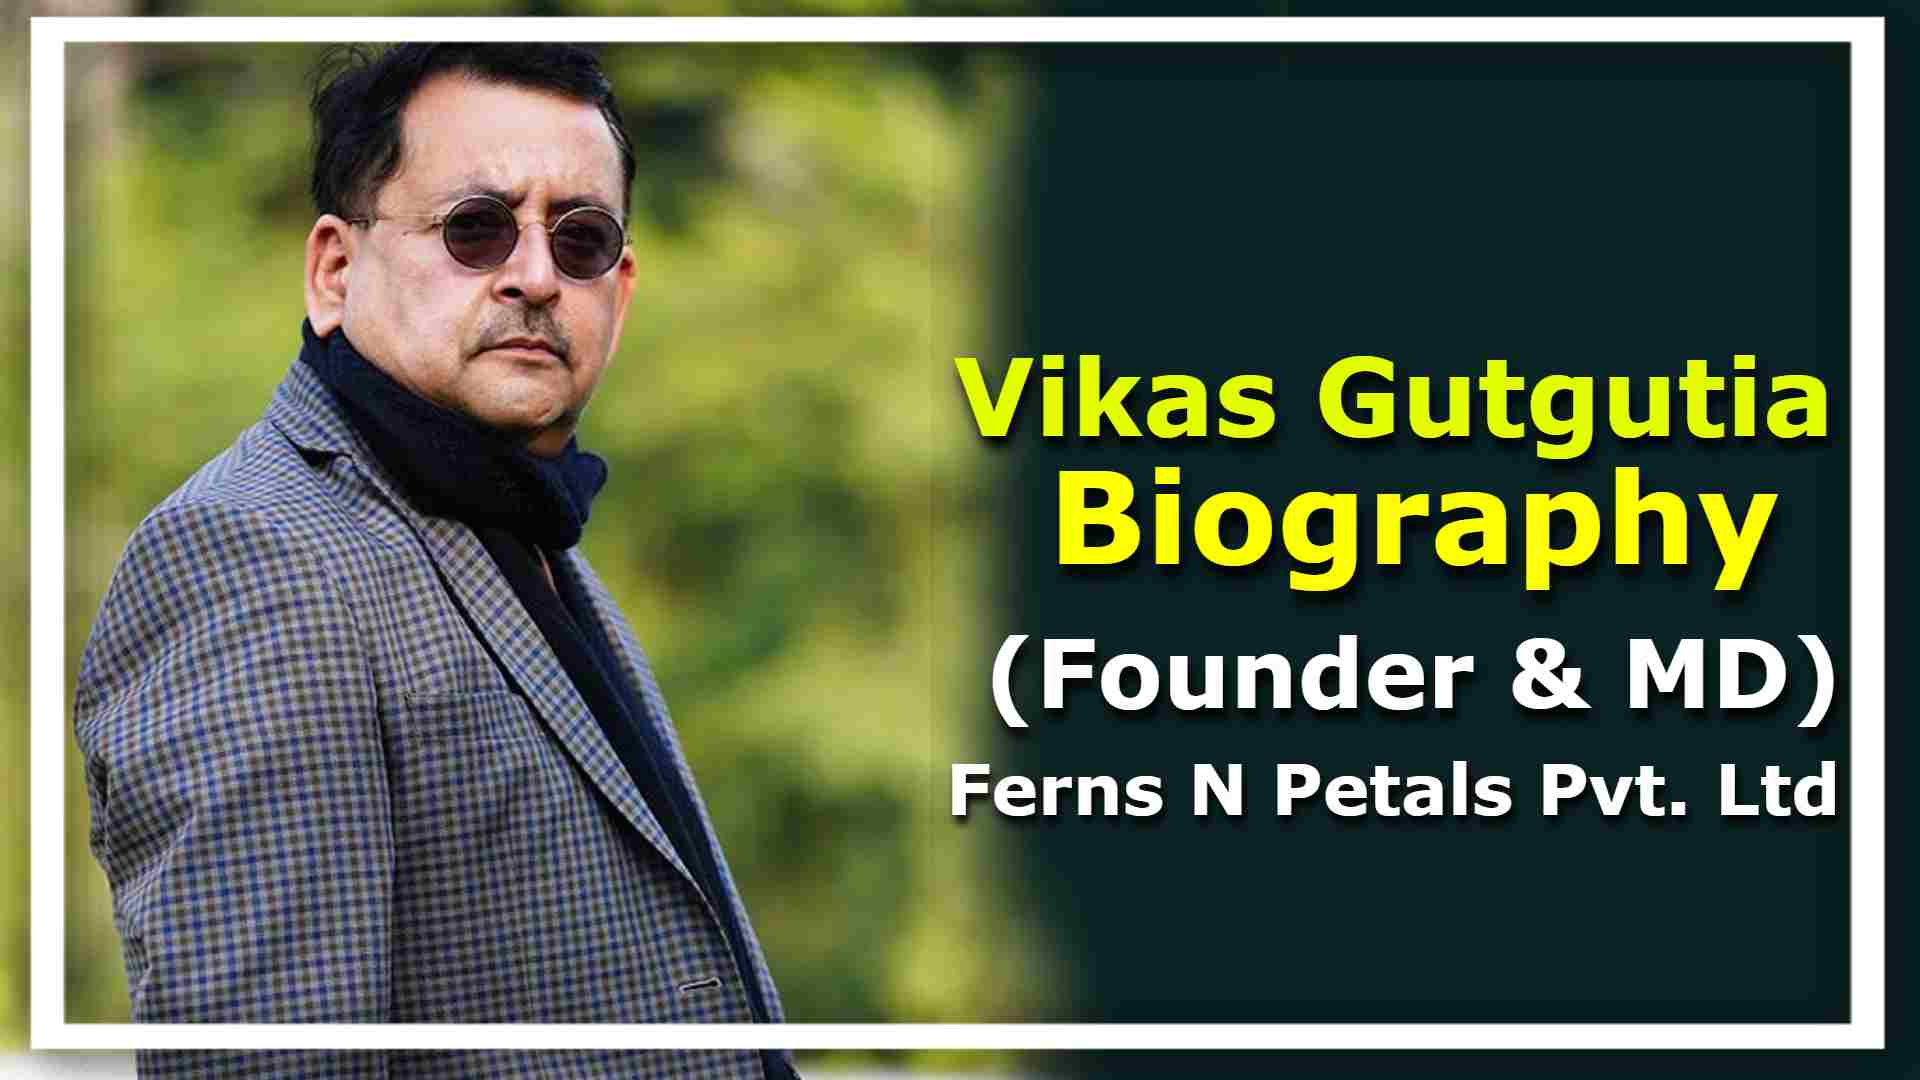 You are currently viewing Vikaas Gutgutia Bio & Wikipedia (Founder & MD – Ferns N Petals Pvt. Ltd) !!